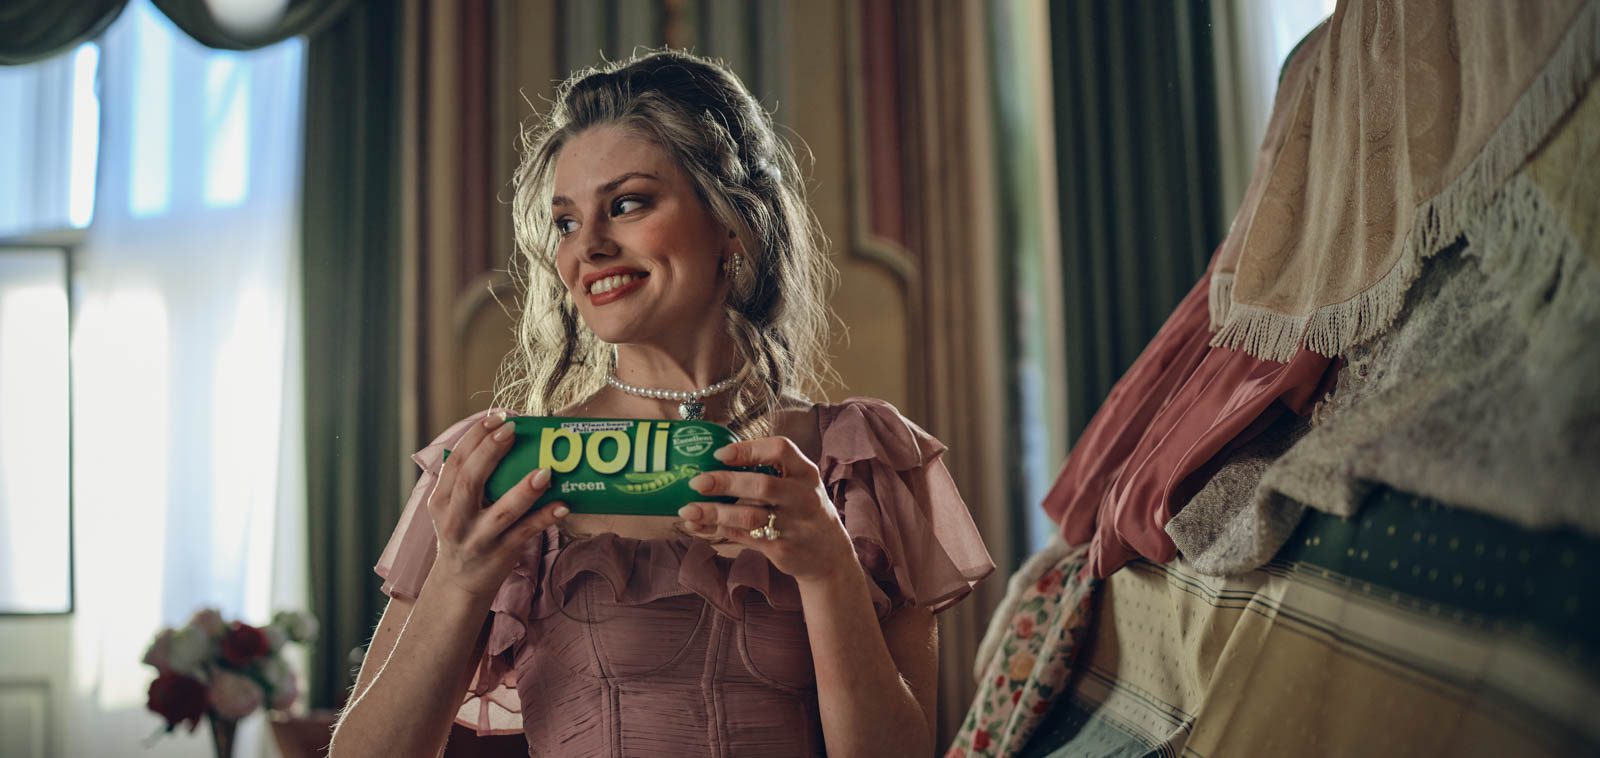 In a room with a castle theme, Maja Šebenik, a Slovenian actress, poses as a princess while holding a new Poli Green sausage.